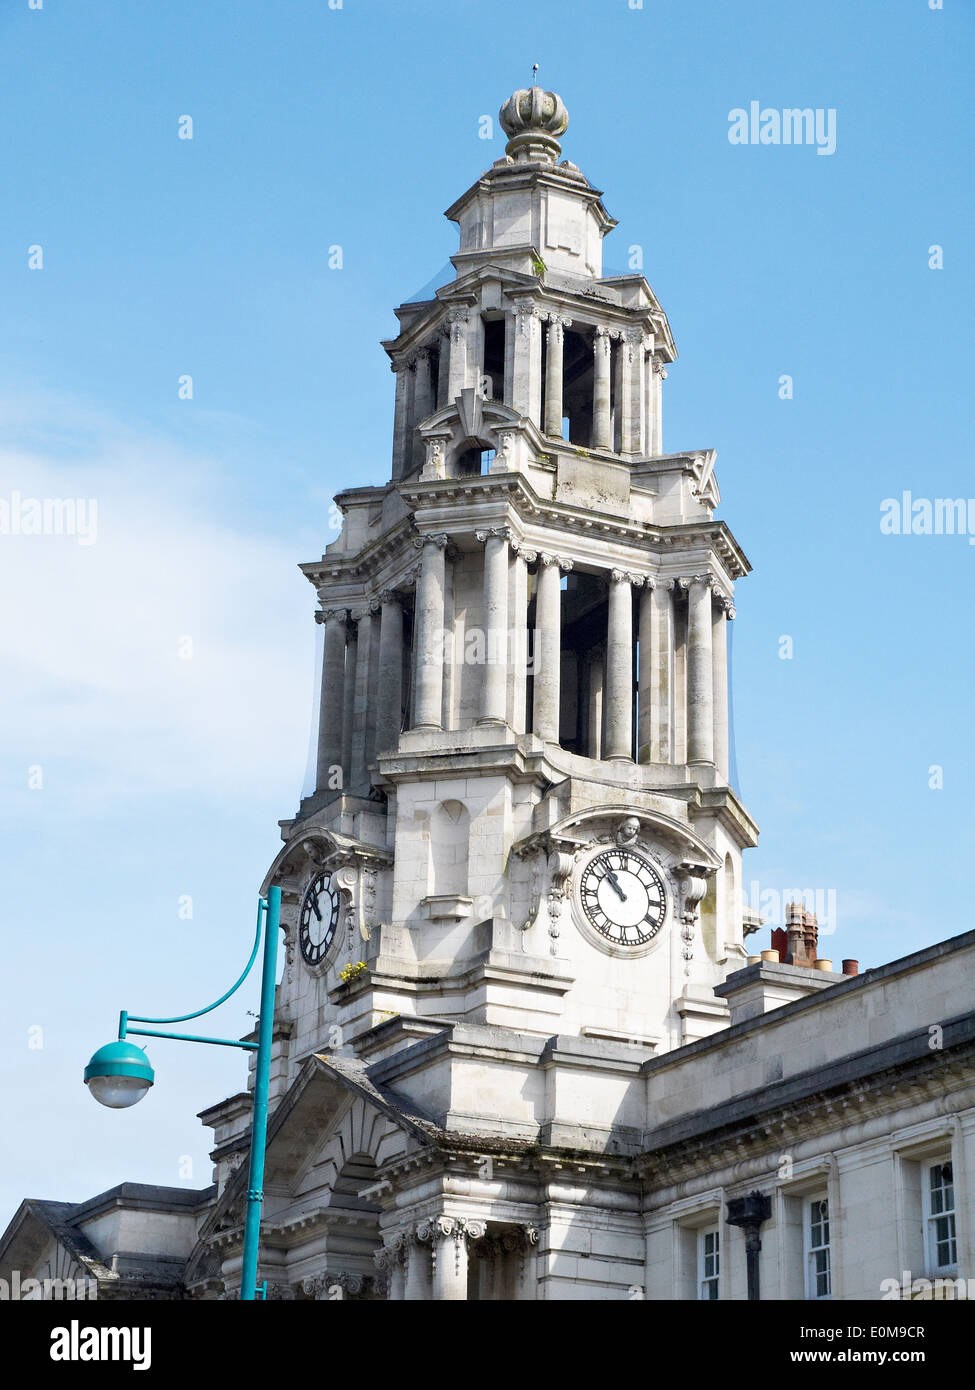 Stockport town hall clock tower UK Stock Photo